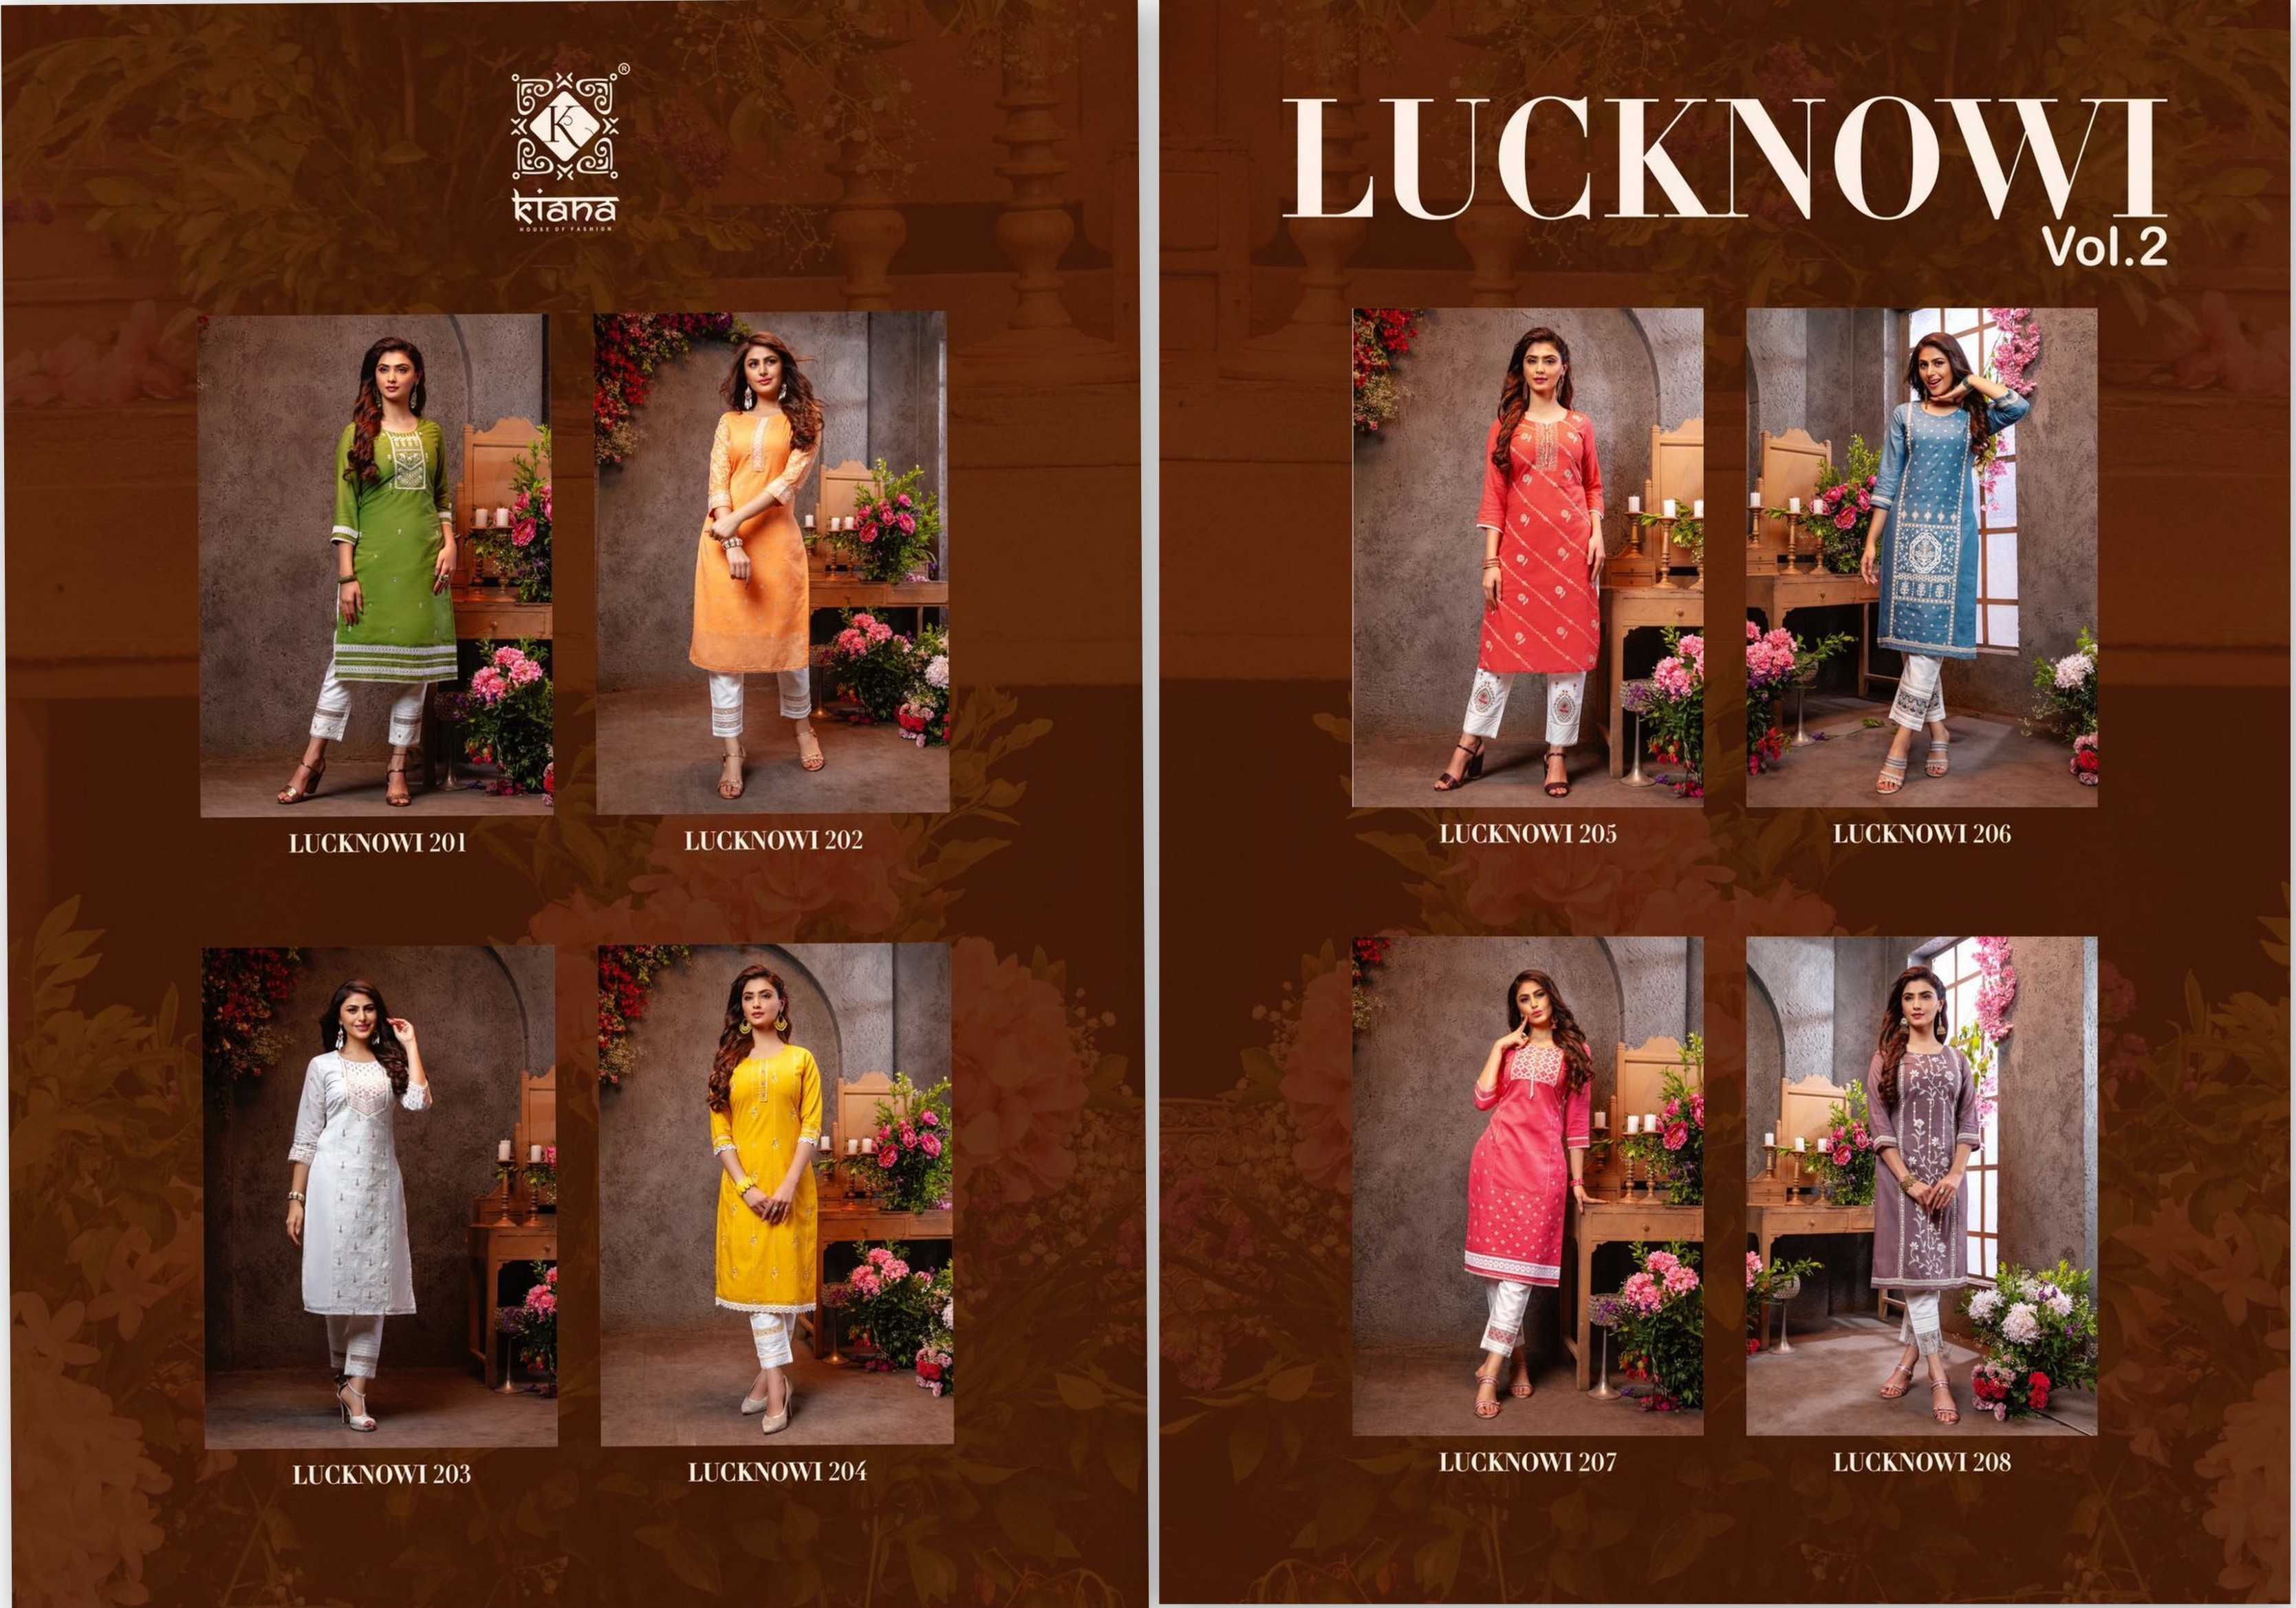 Kiana Fashion Lucknowi 201-208